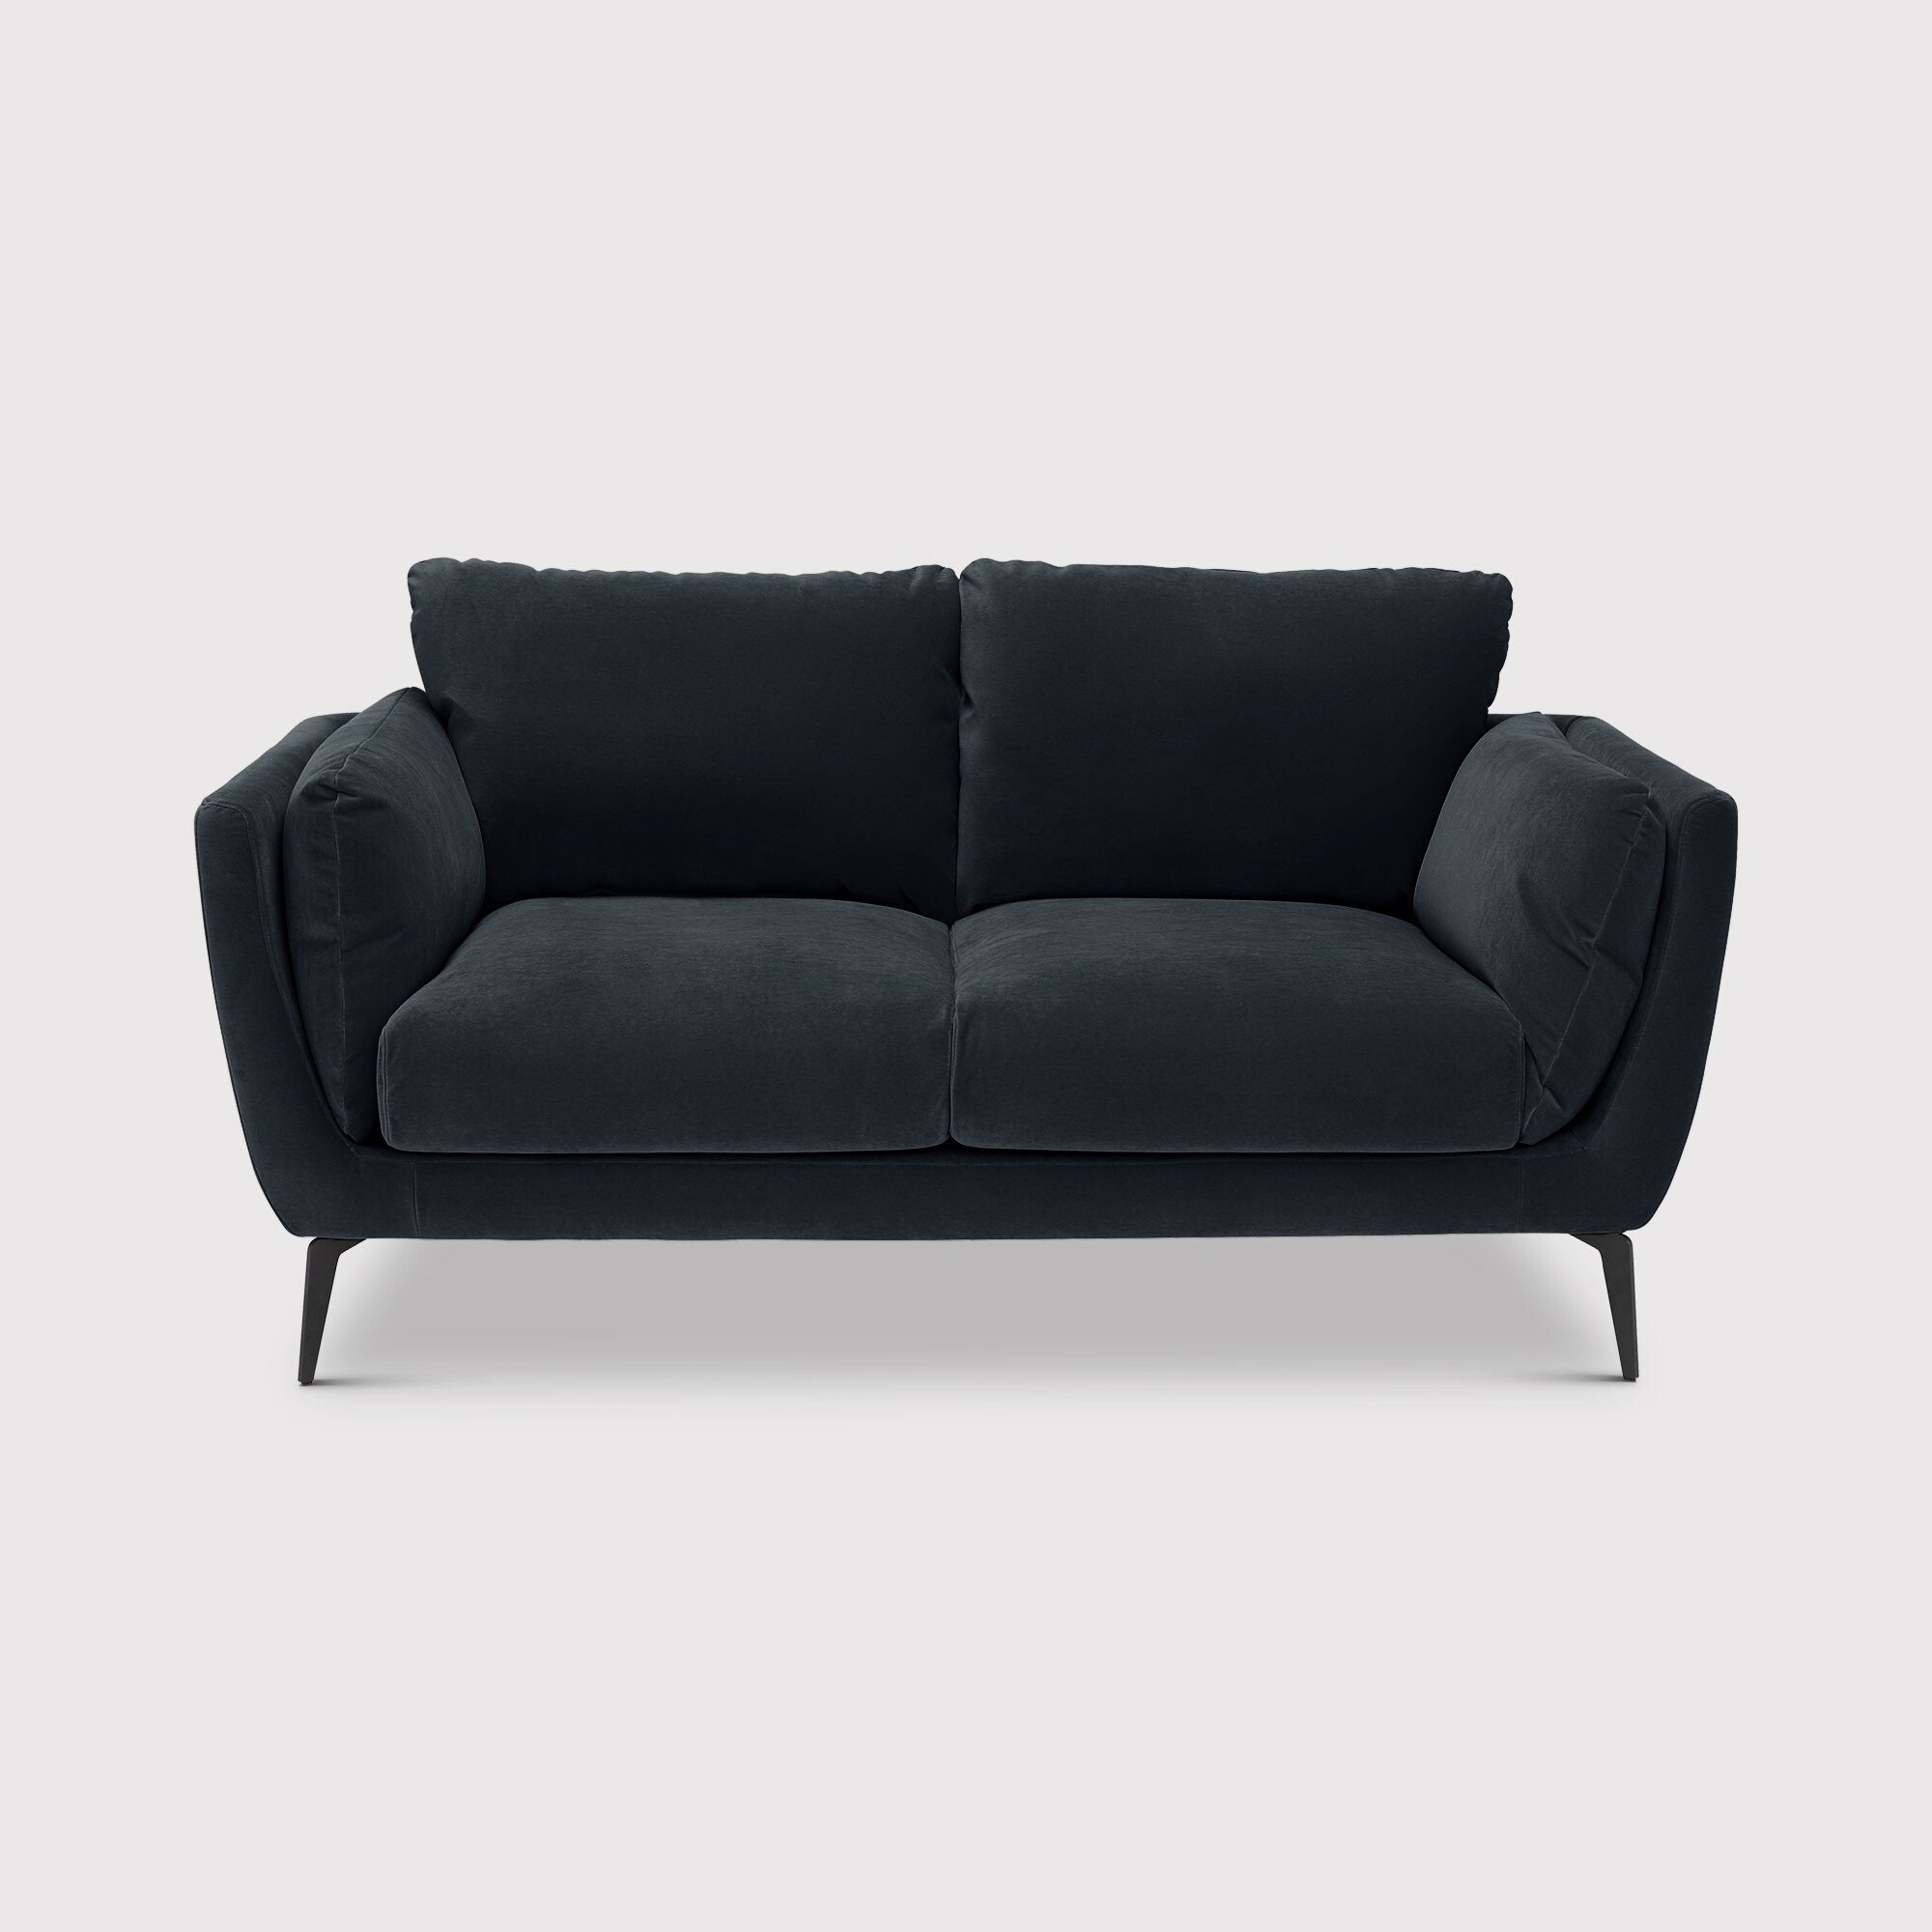 Boone 2 Seater Sofa, Grey Fabric | Barker & Stonehouse